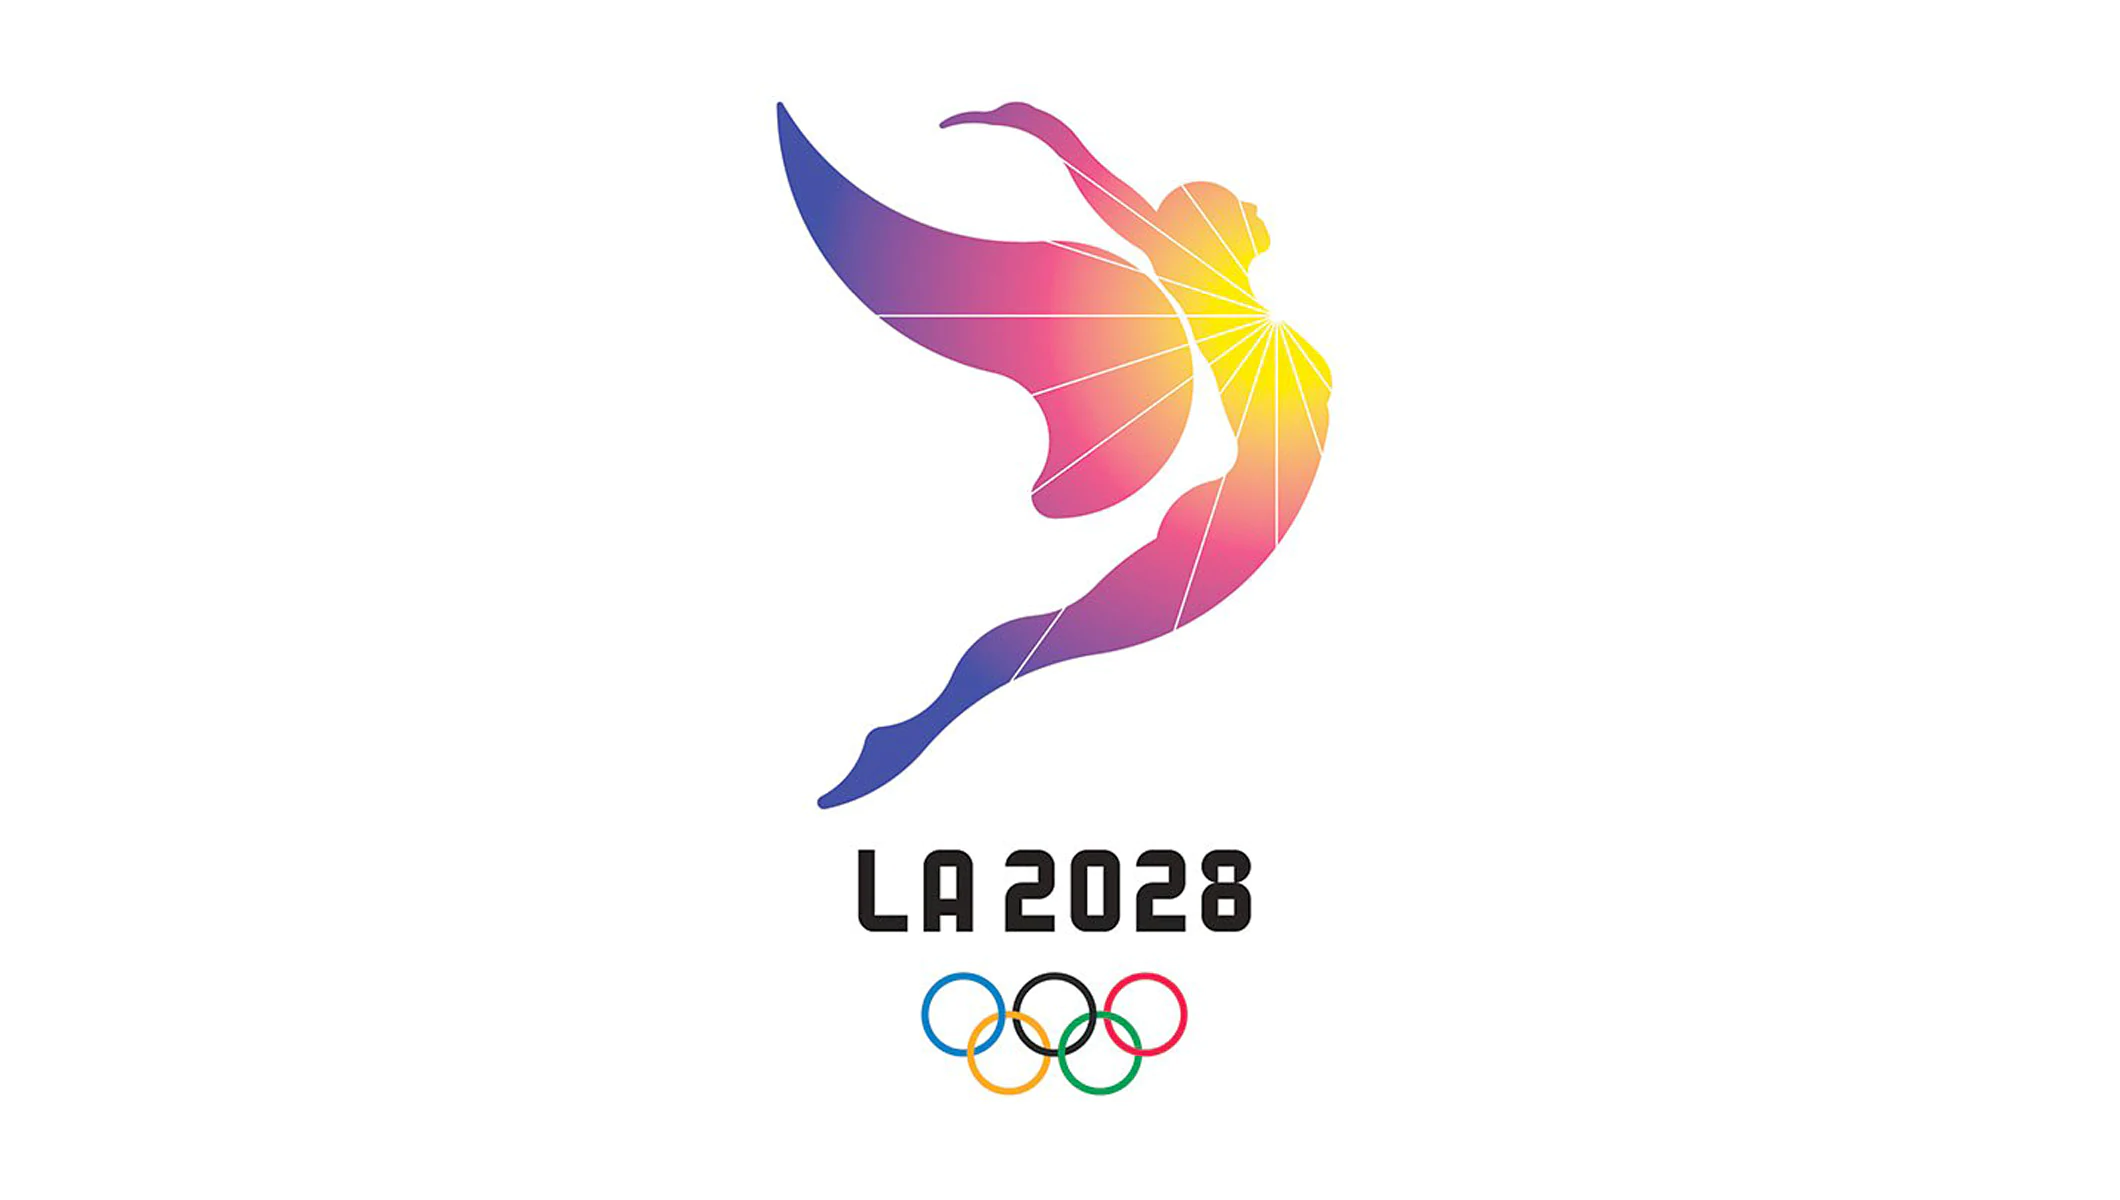 Los Angeles OL 2028